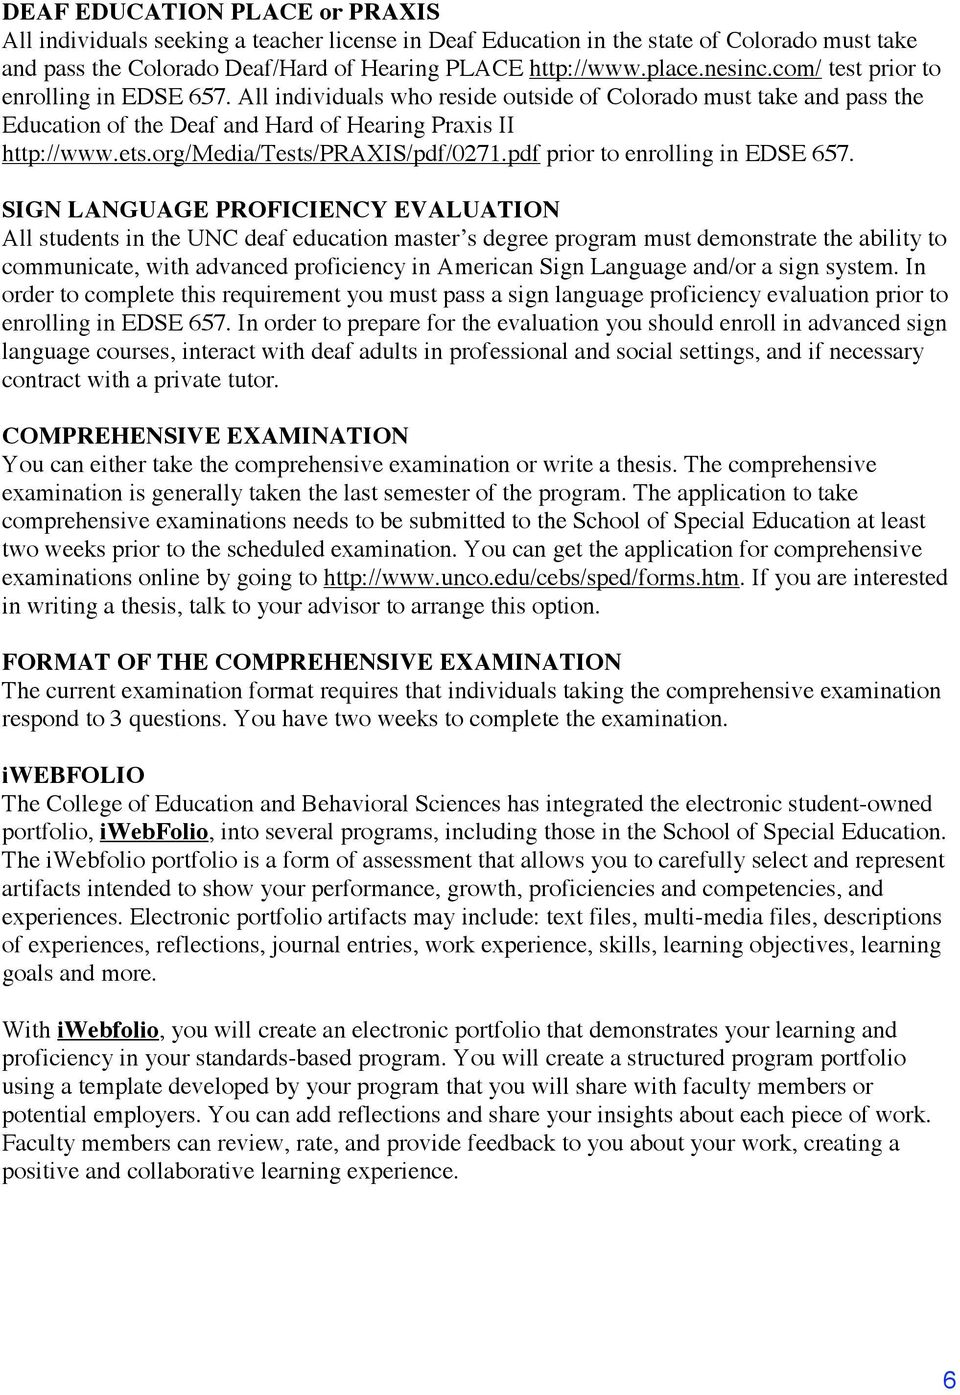 org/media/tests/praxis/pdf/0271.pdf prior to enrolling in EDSE 657.